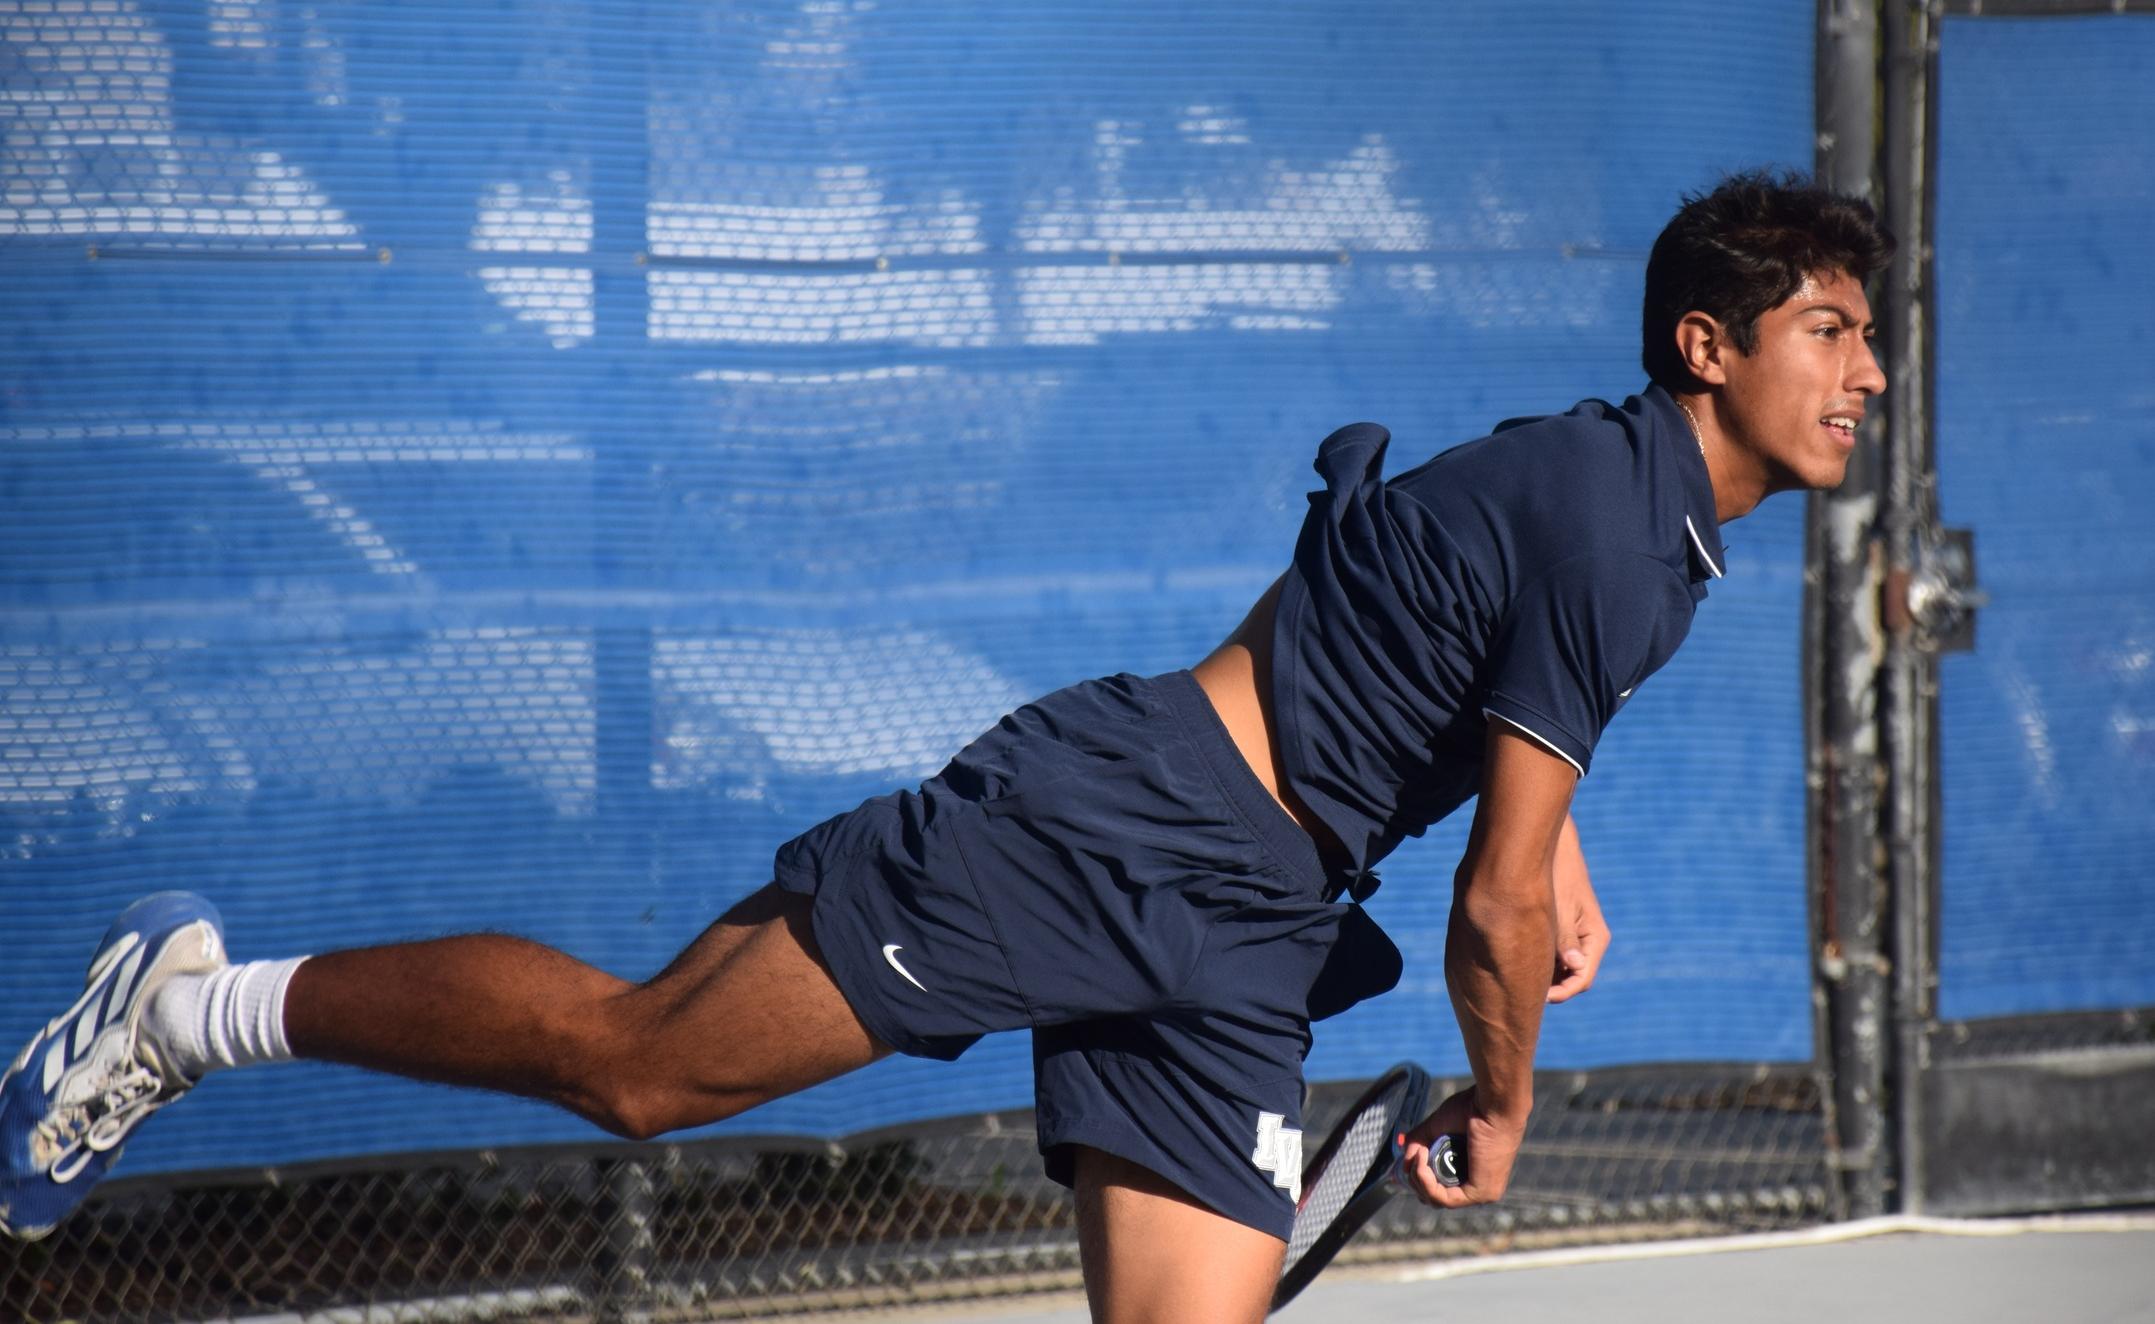 Men's tennis team rolls again, sweeps Orange Coast at home